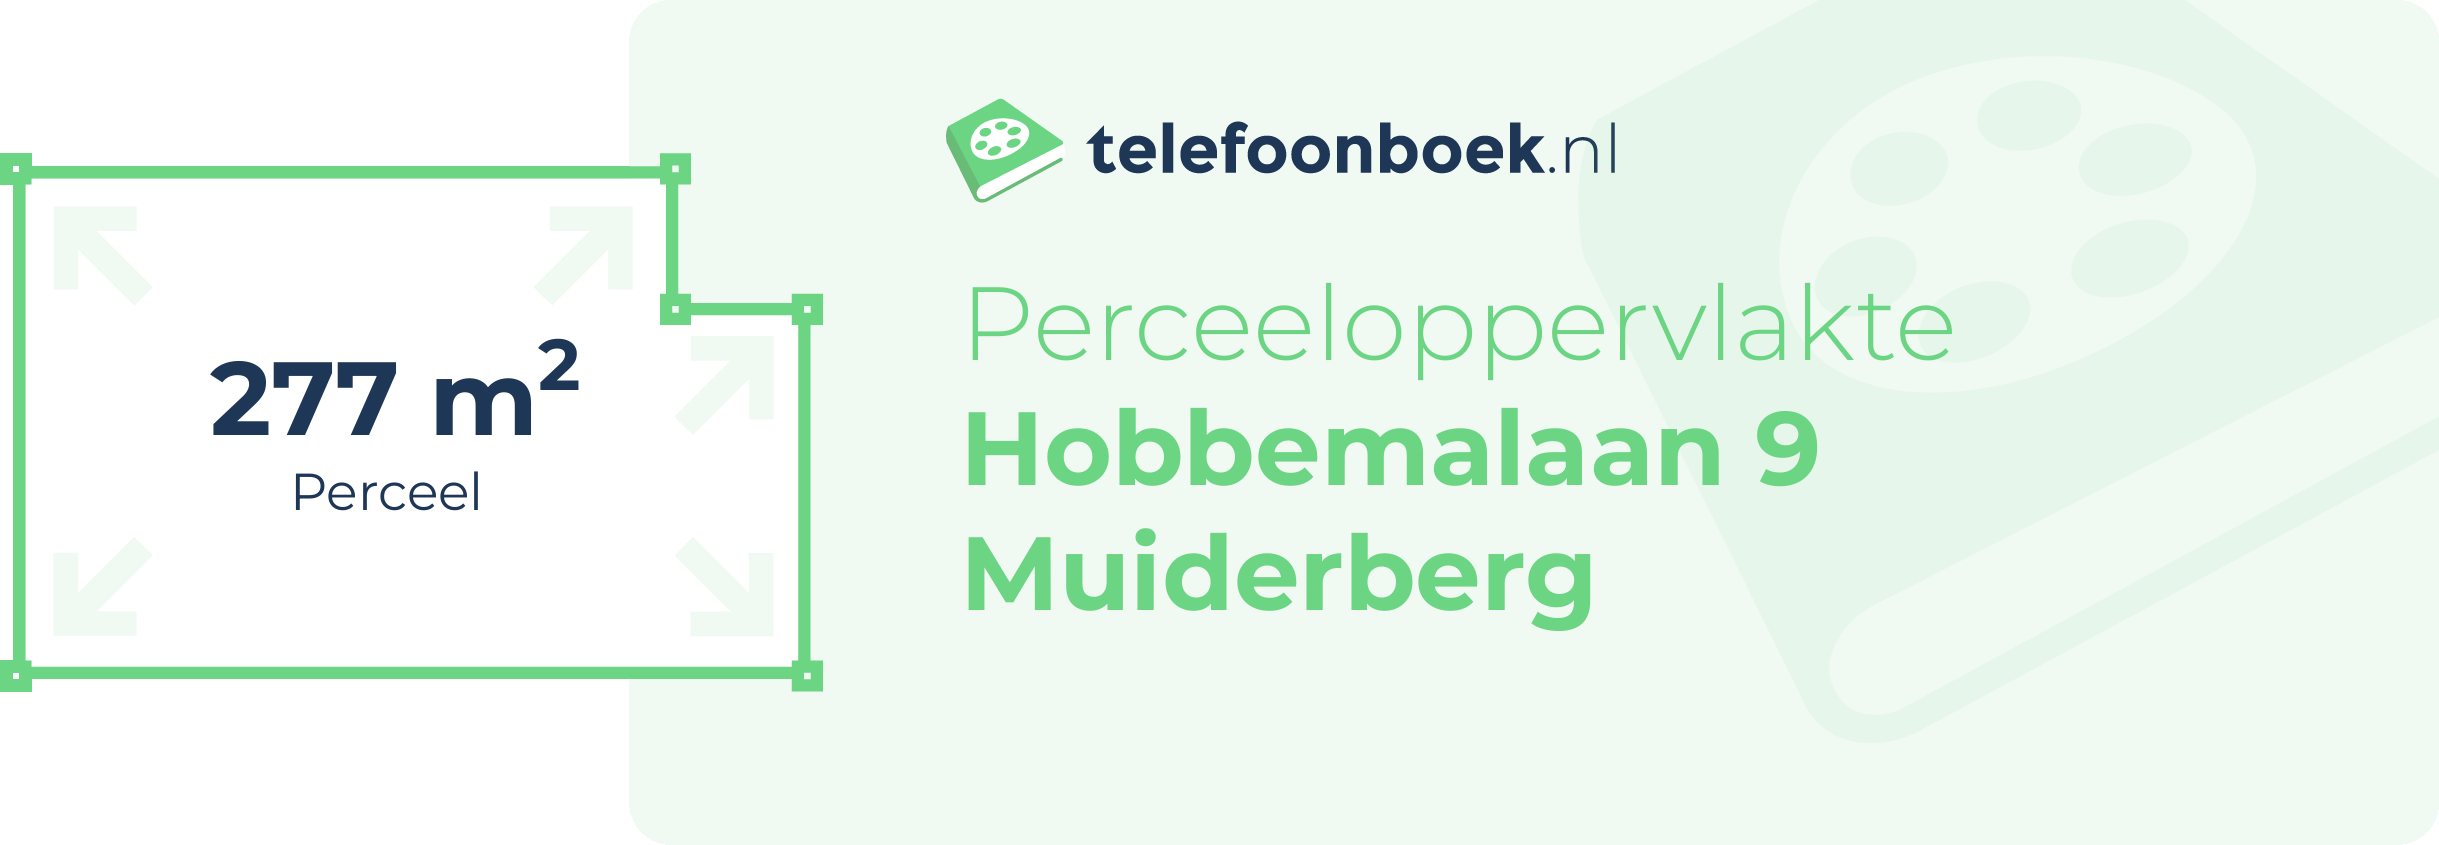 Perceeloppervlakte Hobbemalaan 9 Muiderberg